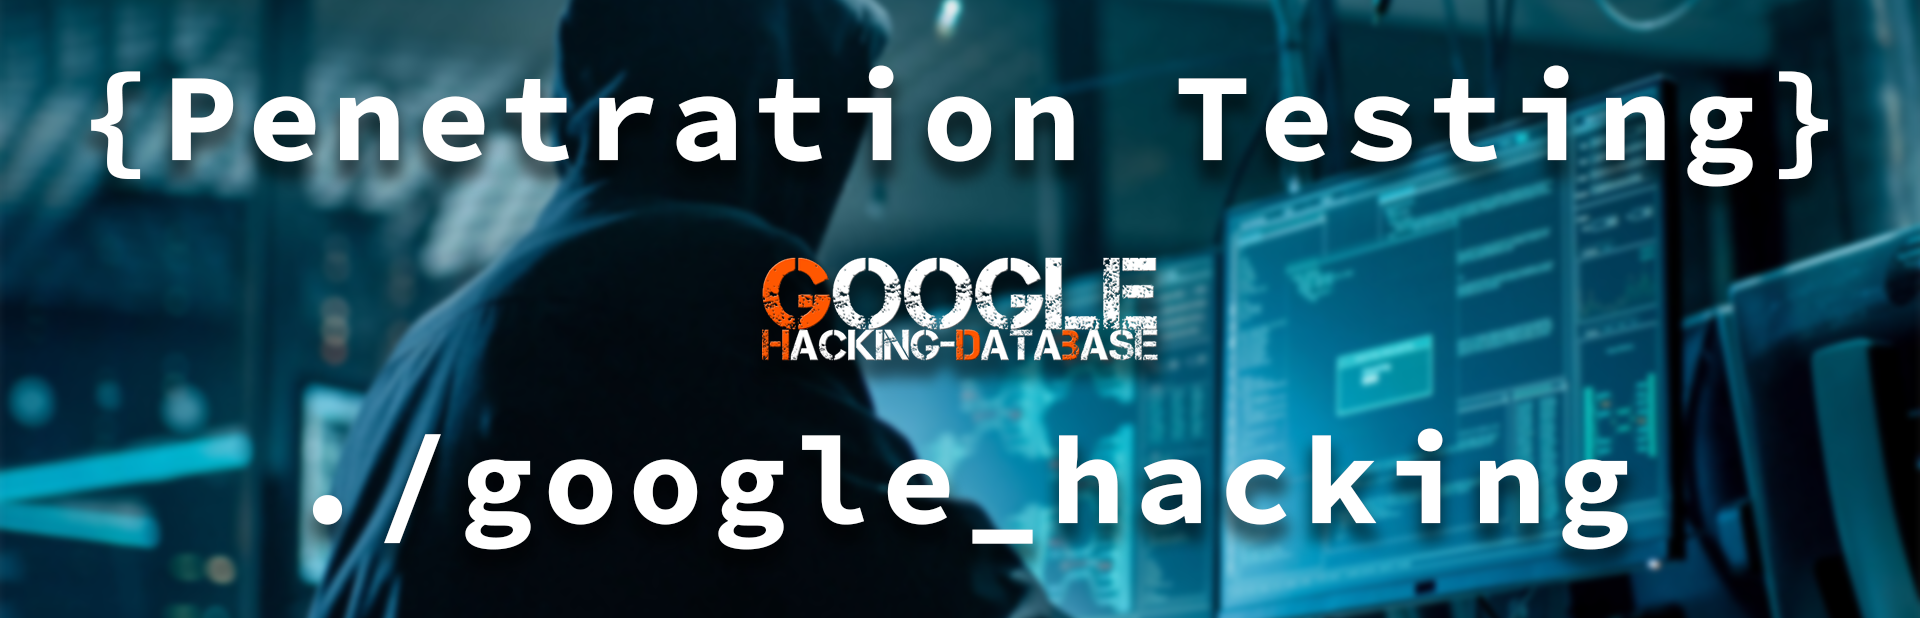 Tesla reccomend penetration for Google testing hacking